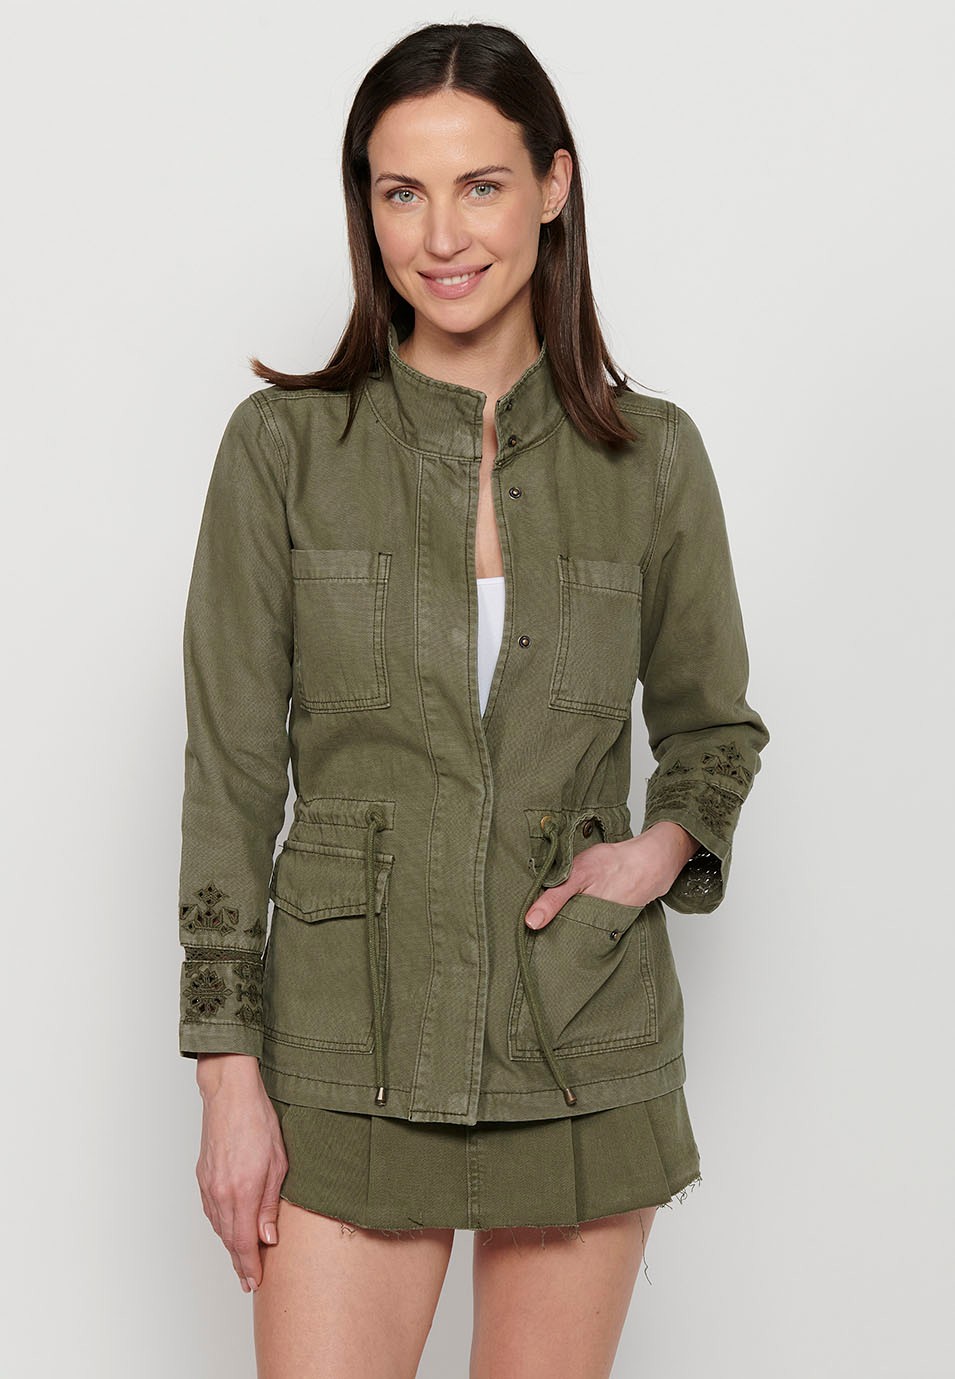 Short parka jacket, front closure, high collar, Khaki color for women